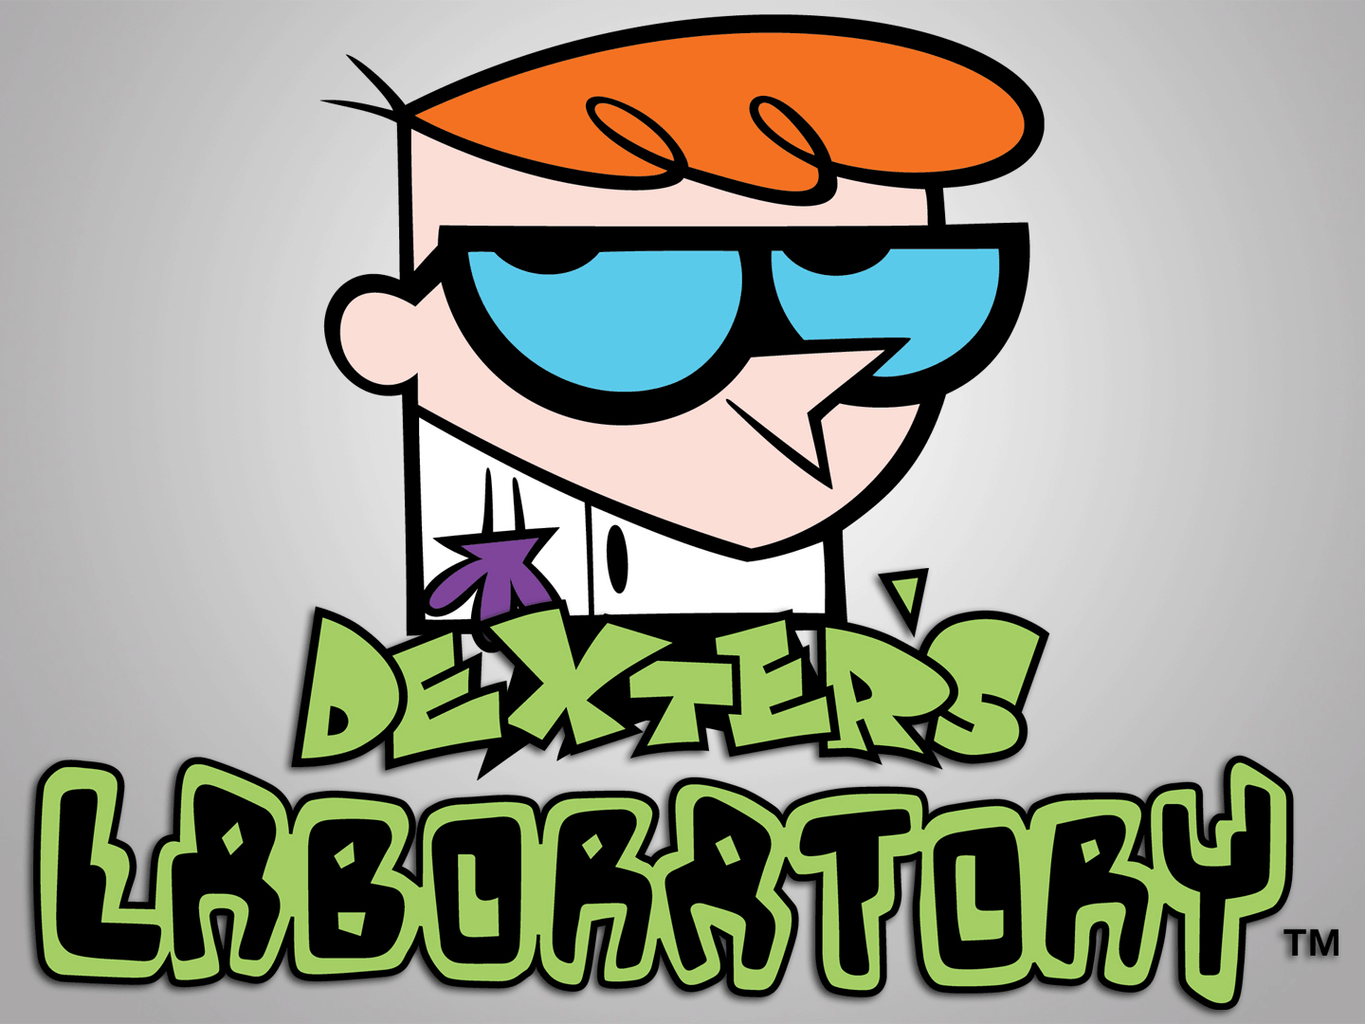 dexter's laboratory